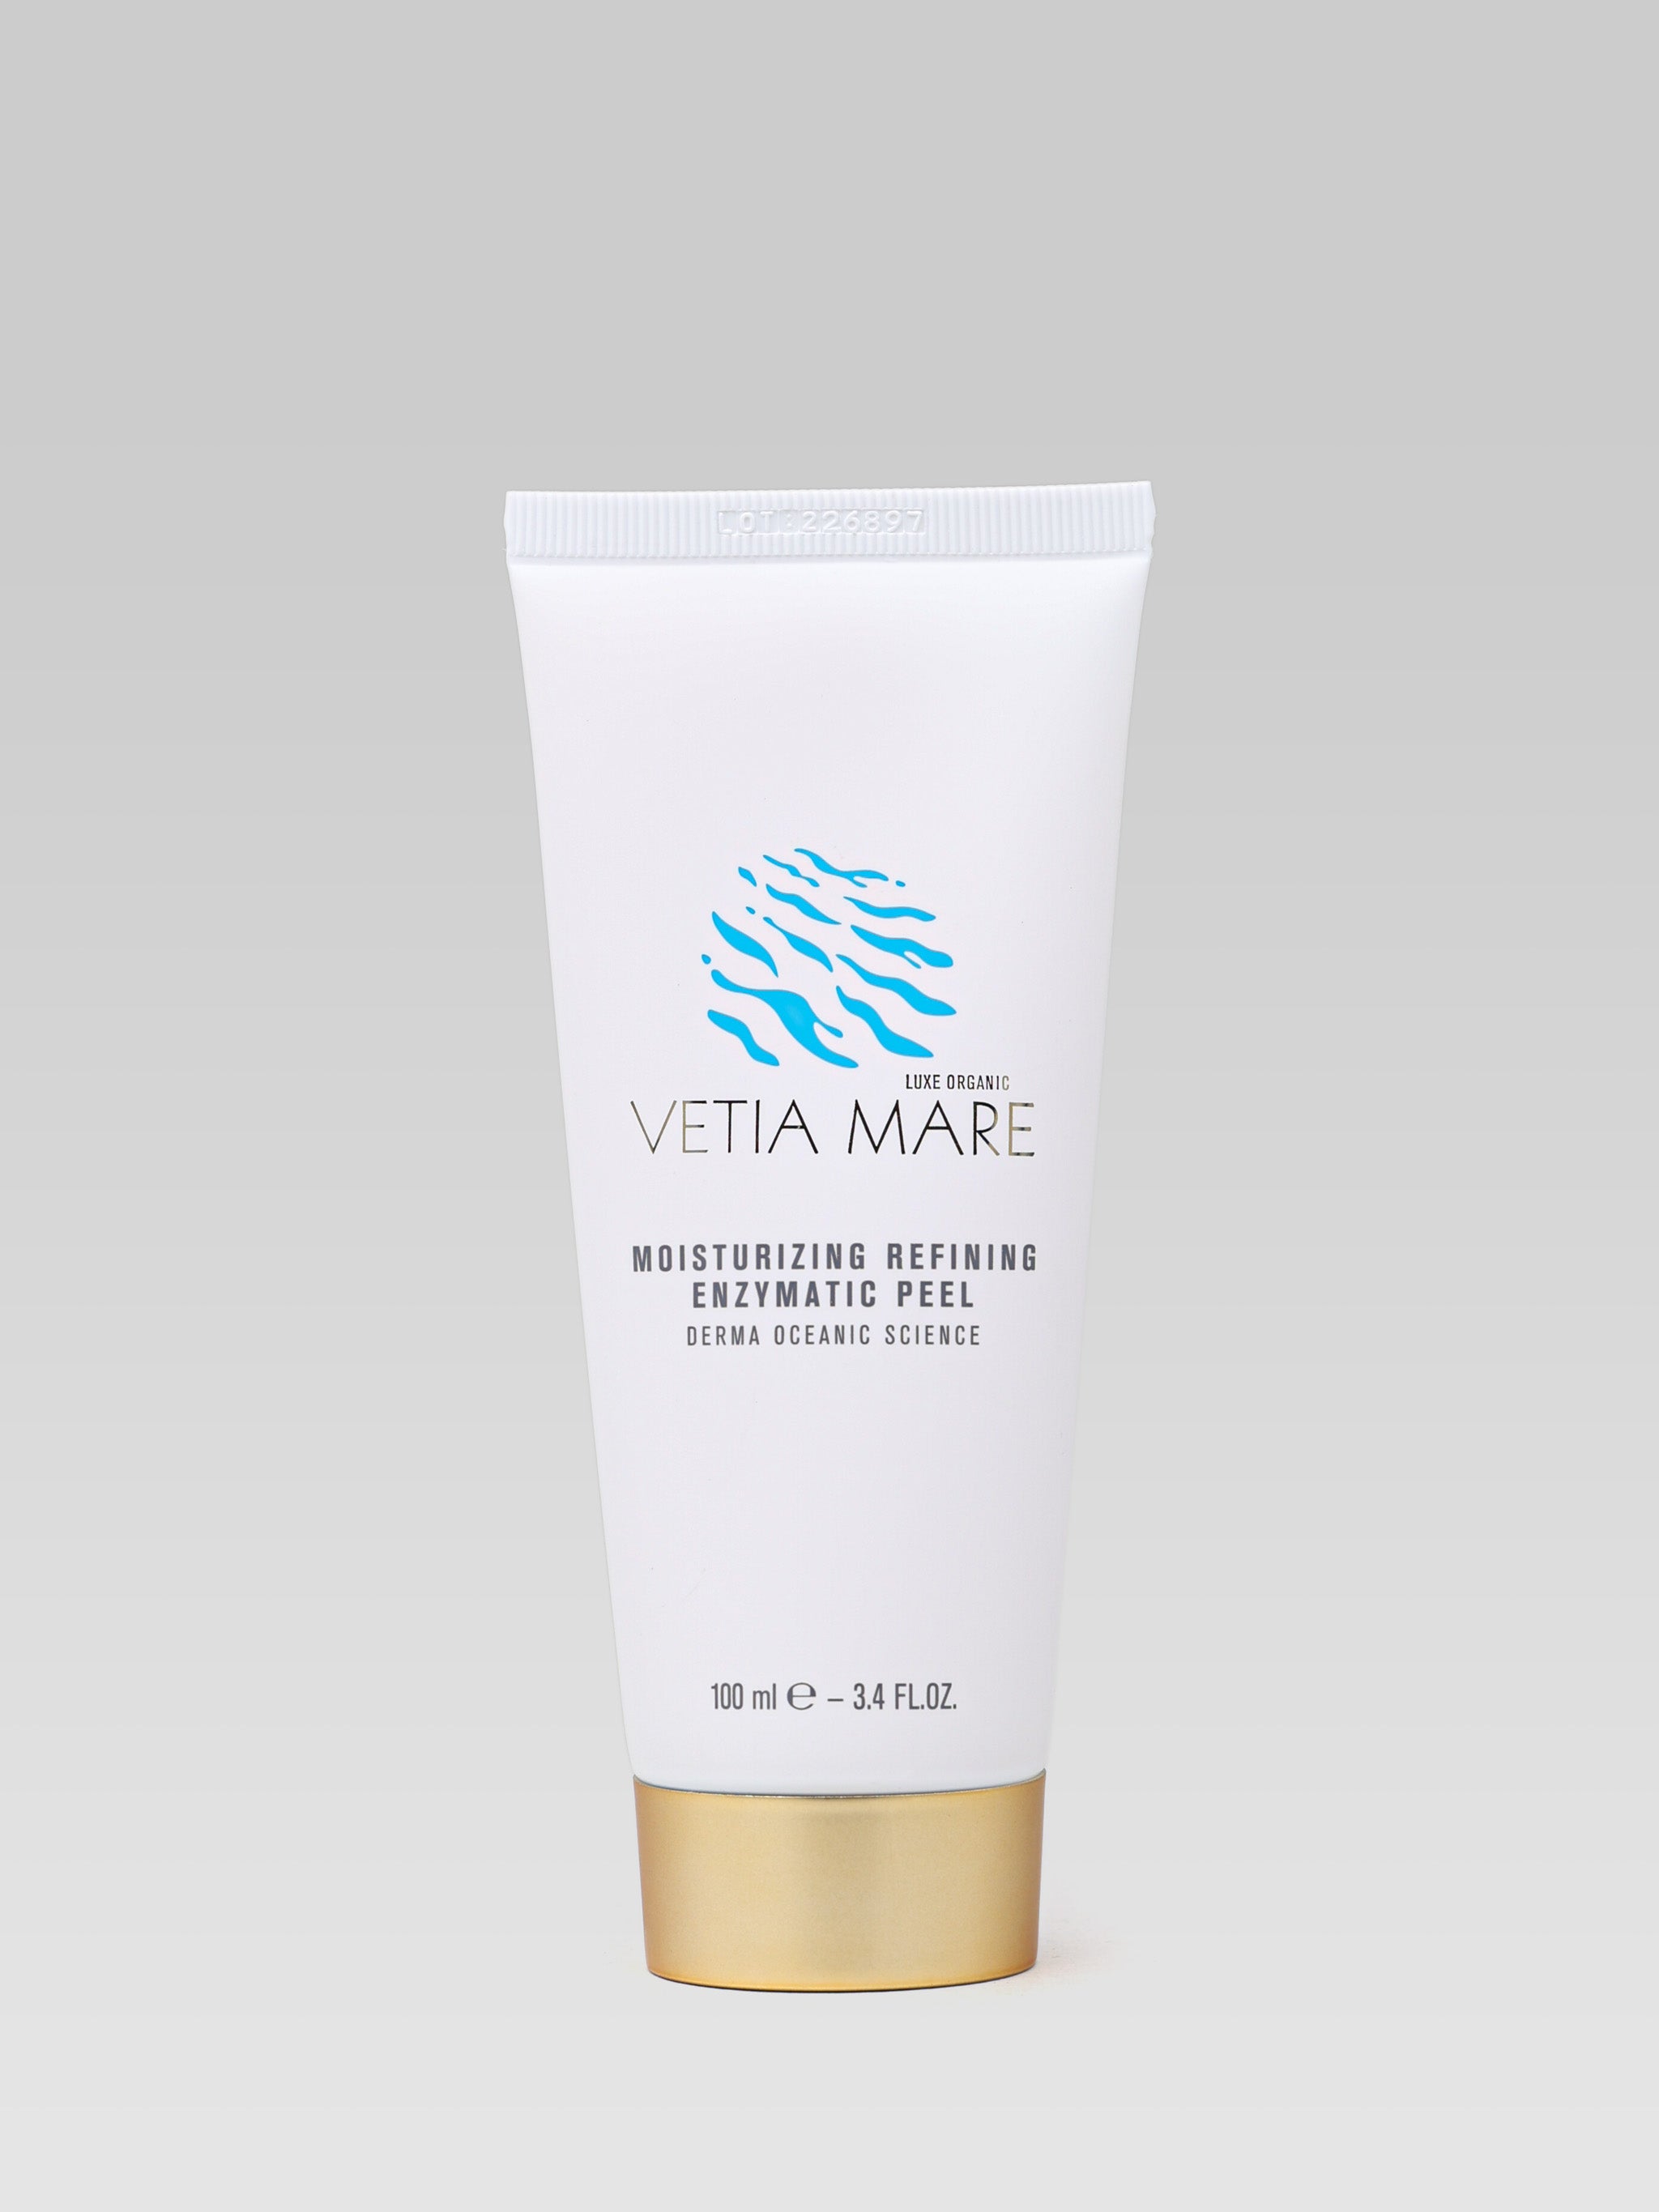 Vetia Mare Enzymatic Peel product shot 